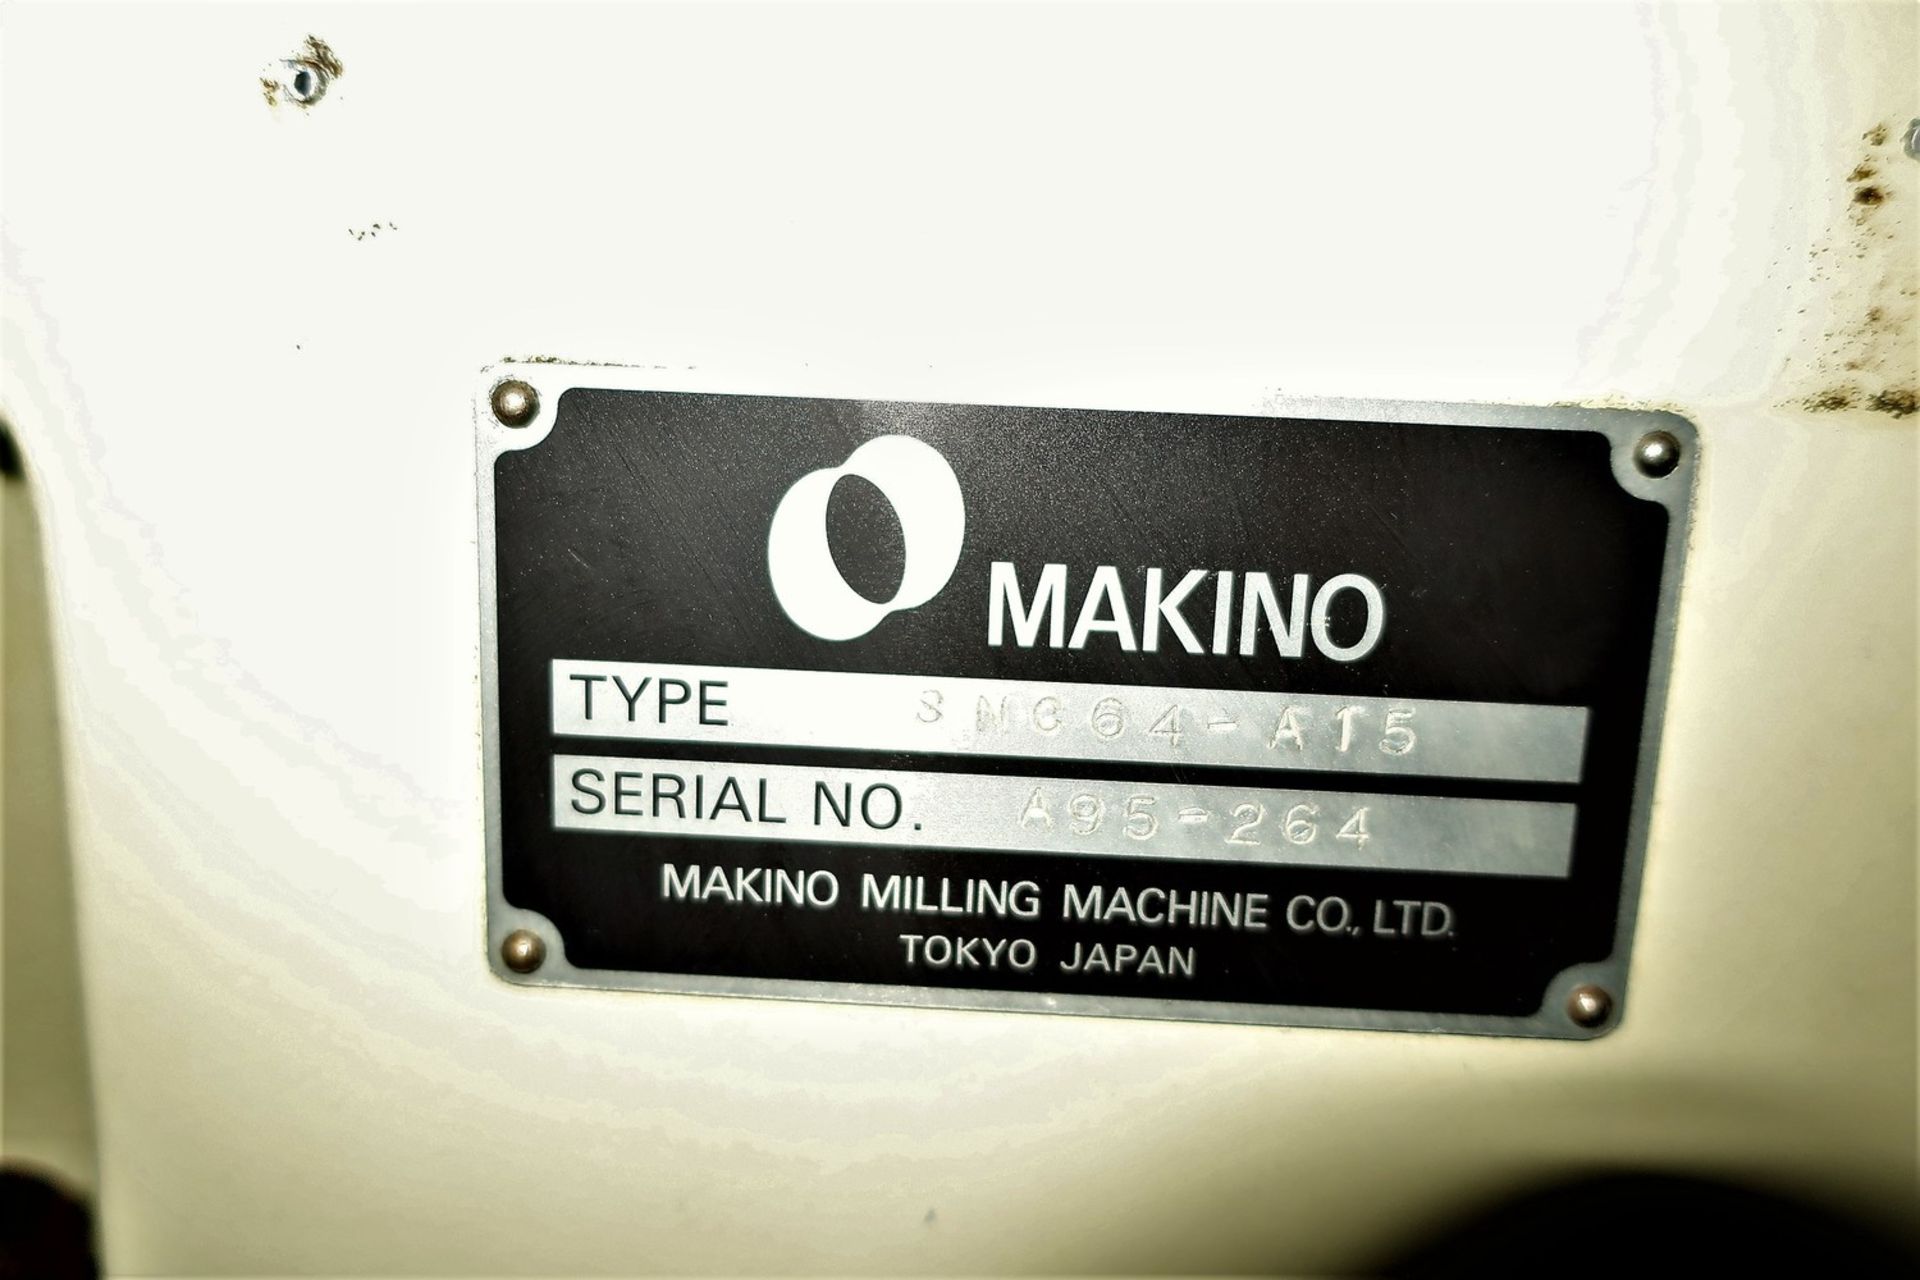 MAKINO SNC64-A15 CNC GRAPHITE MILLING MACHINE, S/N A95-264, NEW 1999 - Image 10 of 10